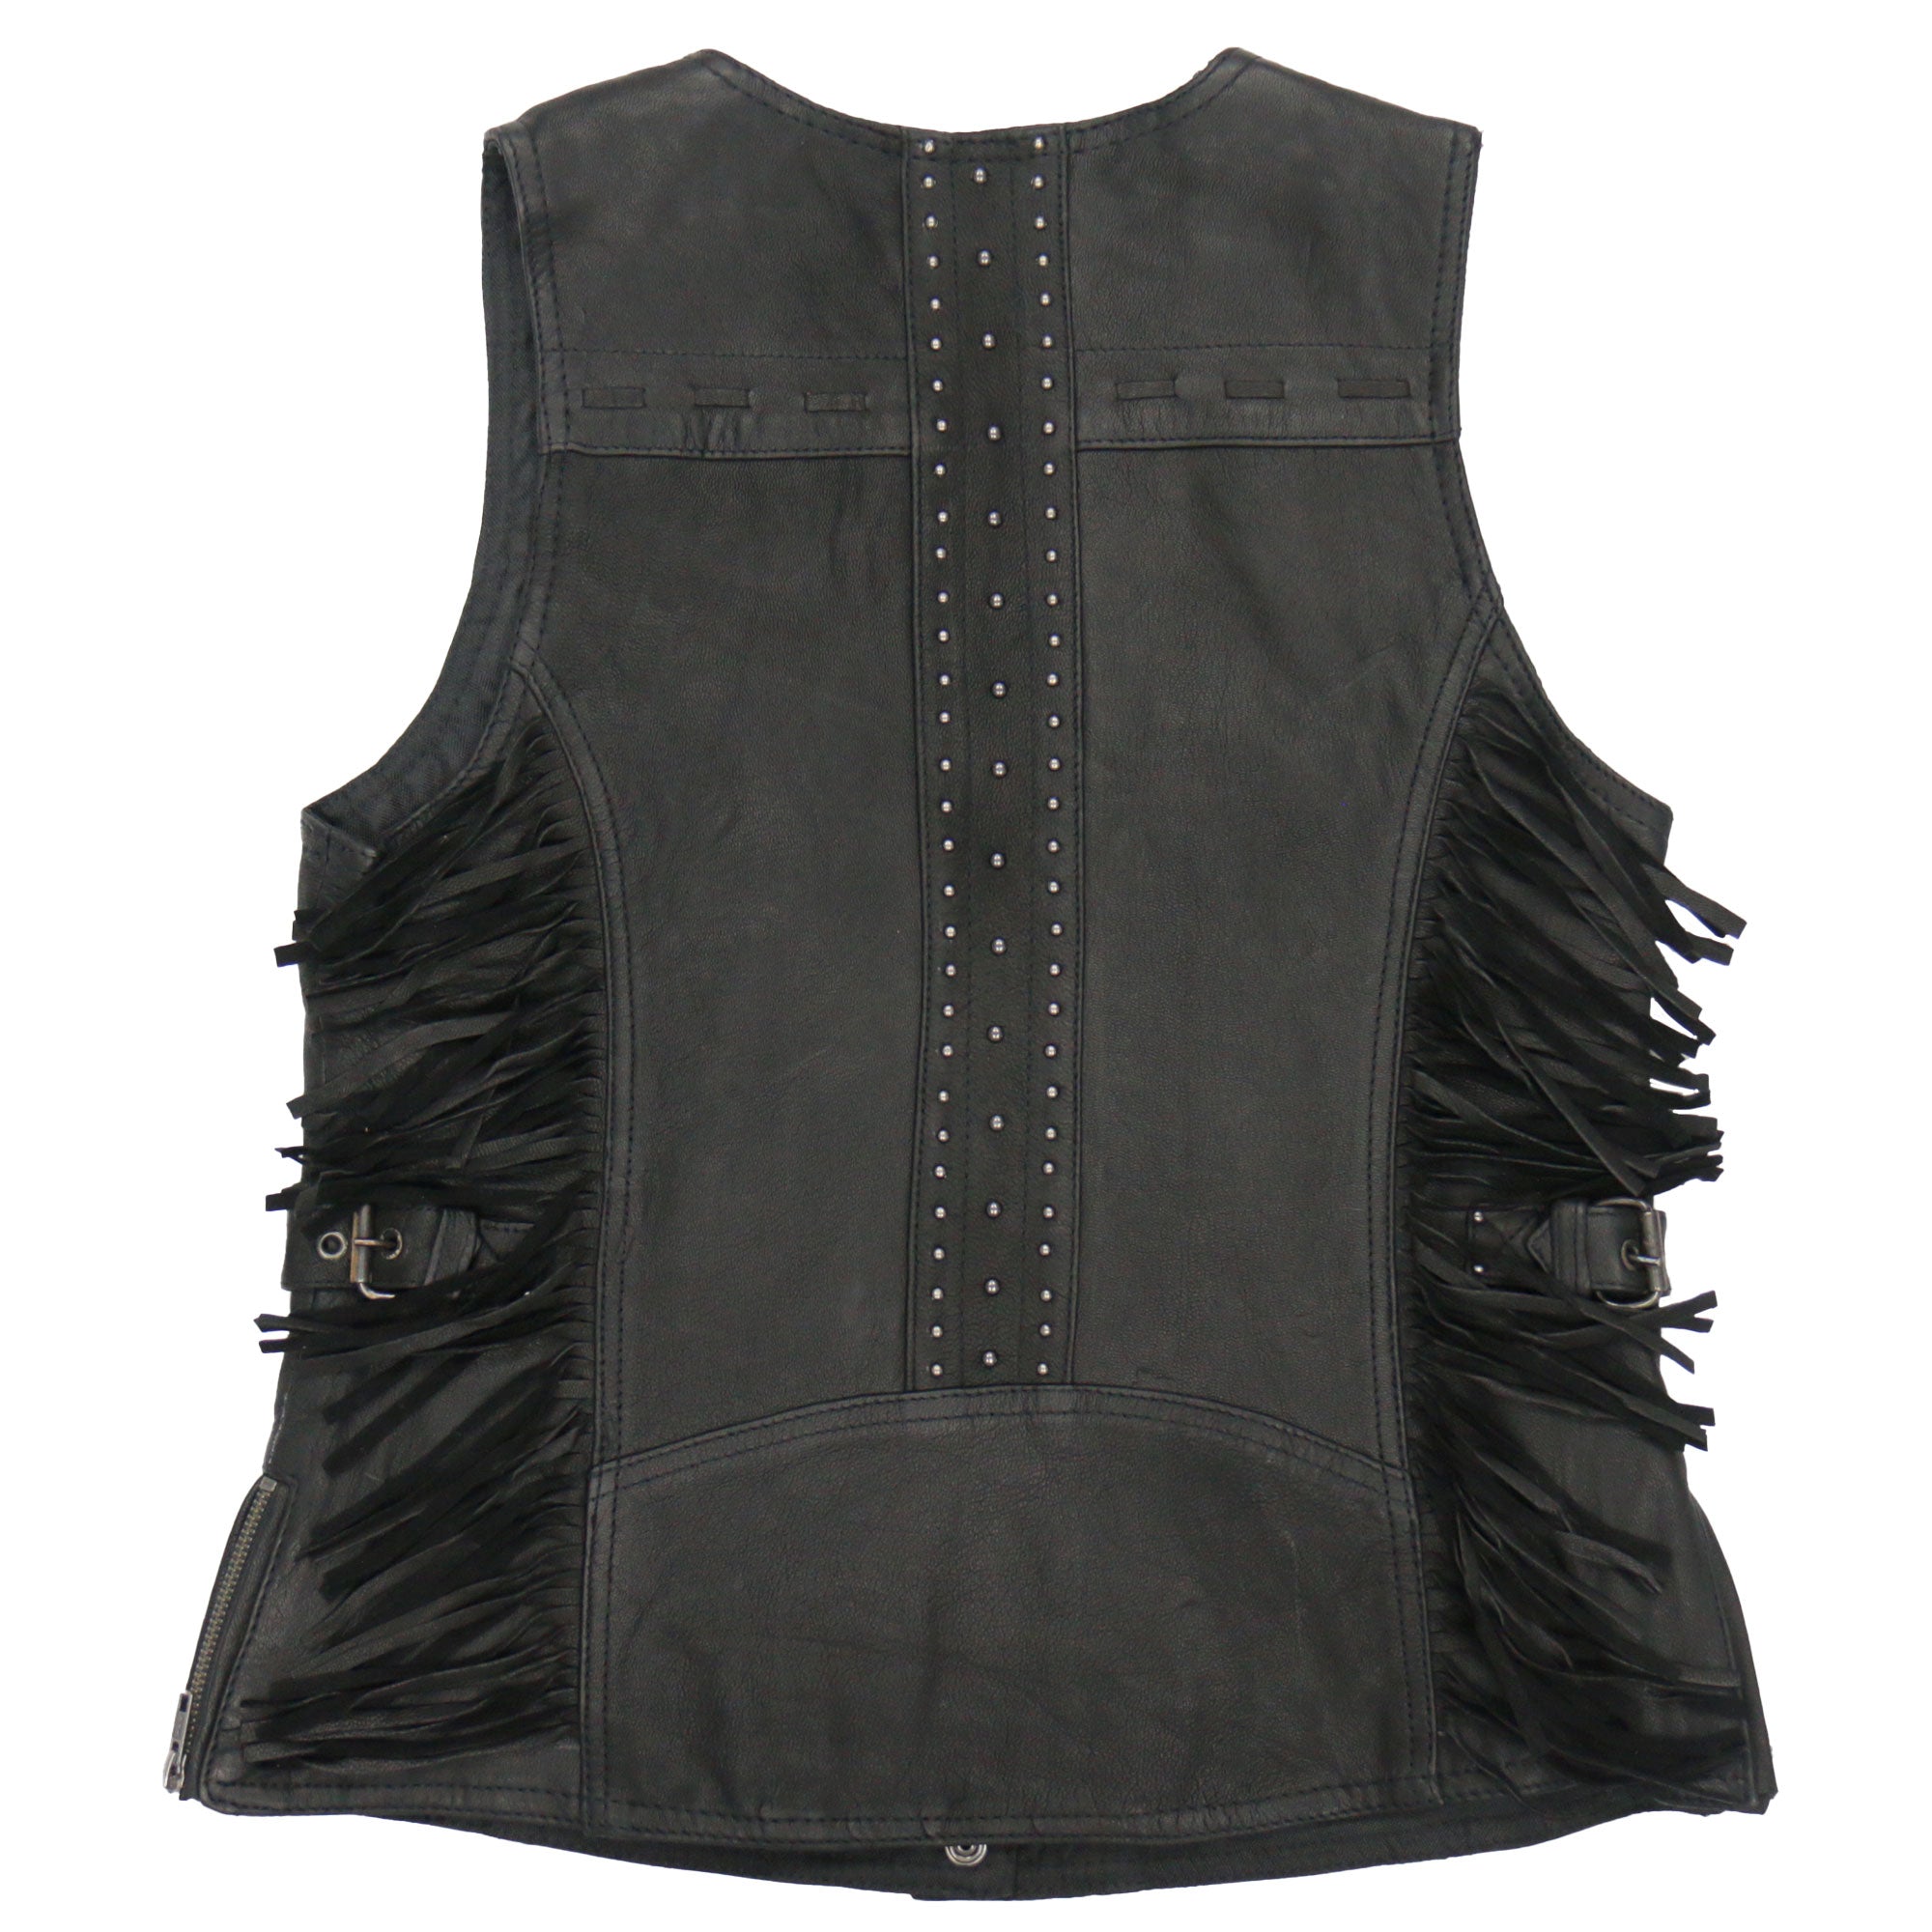 Hot Leathers VSL1014 Ladies Motorcycle style Black Leather Biker Vest with Fringe